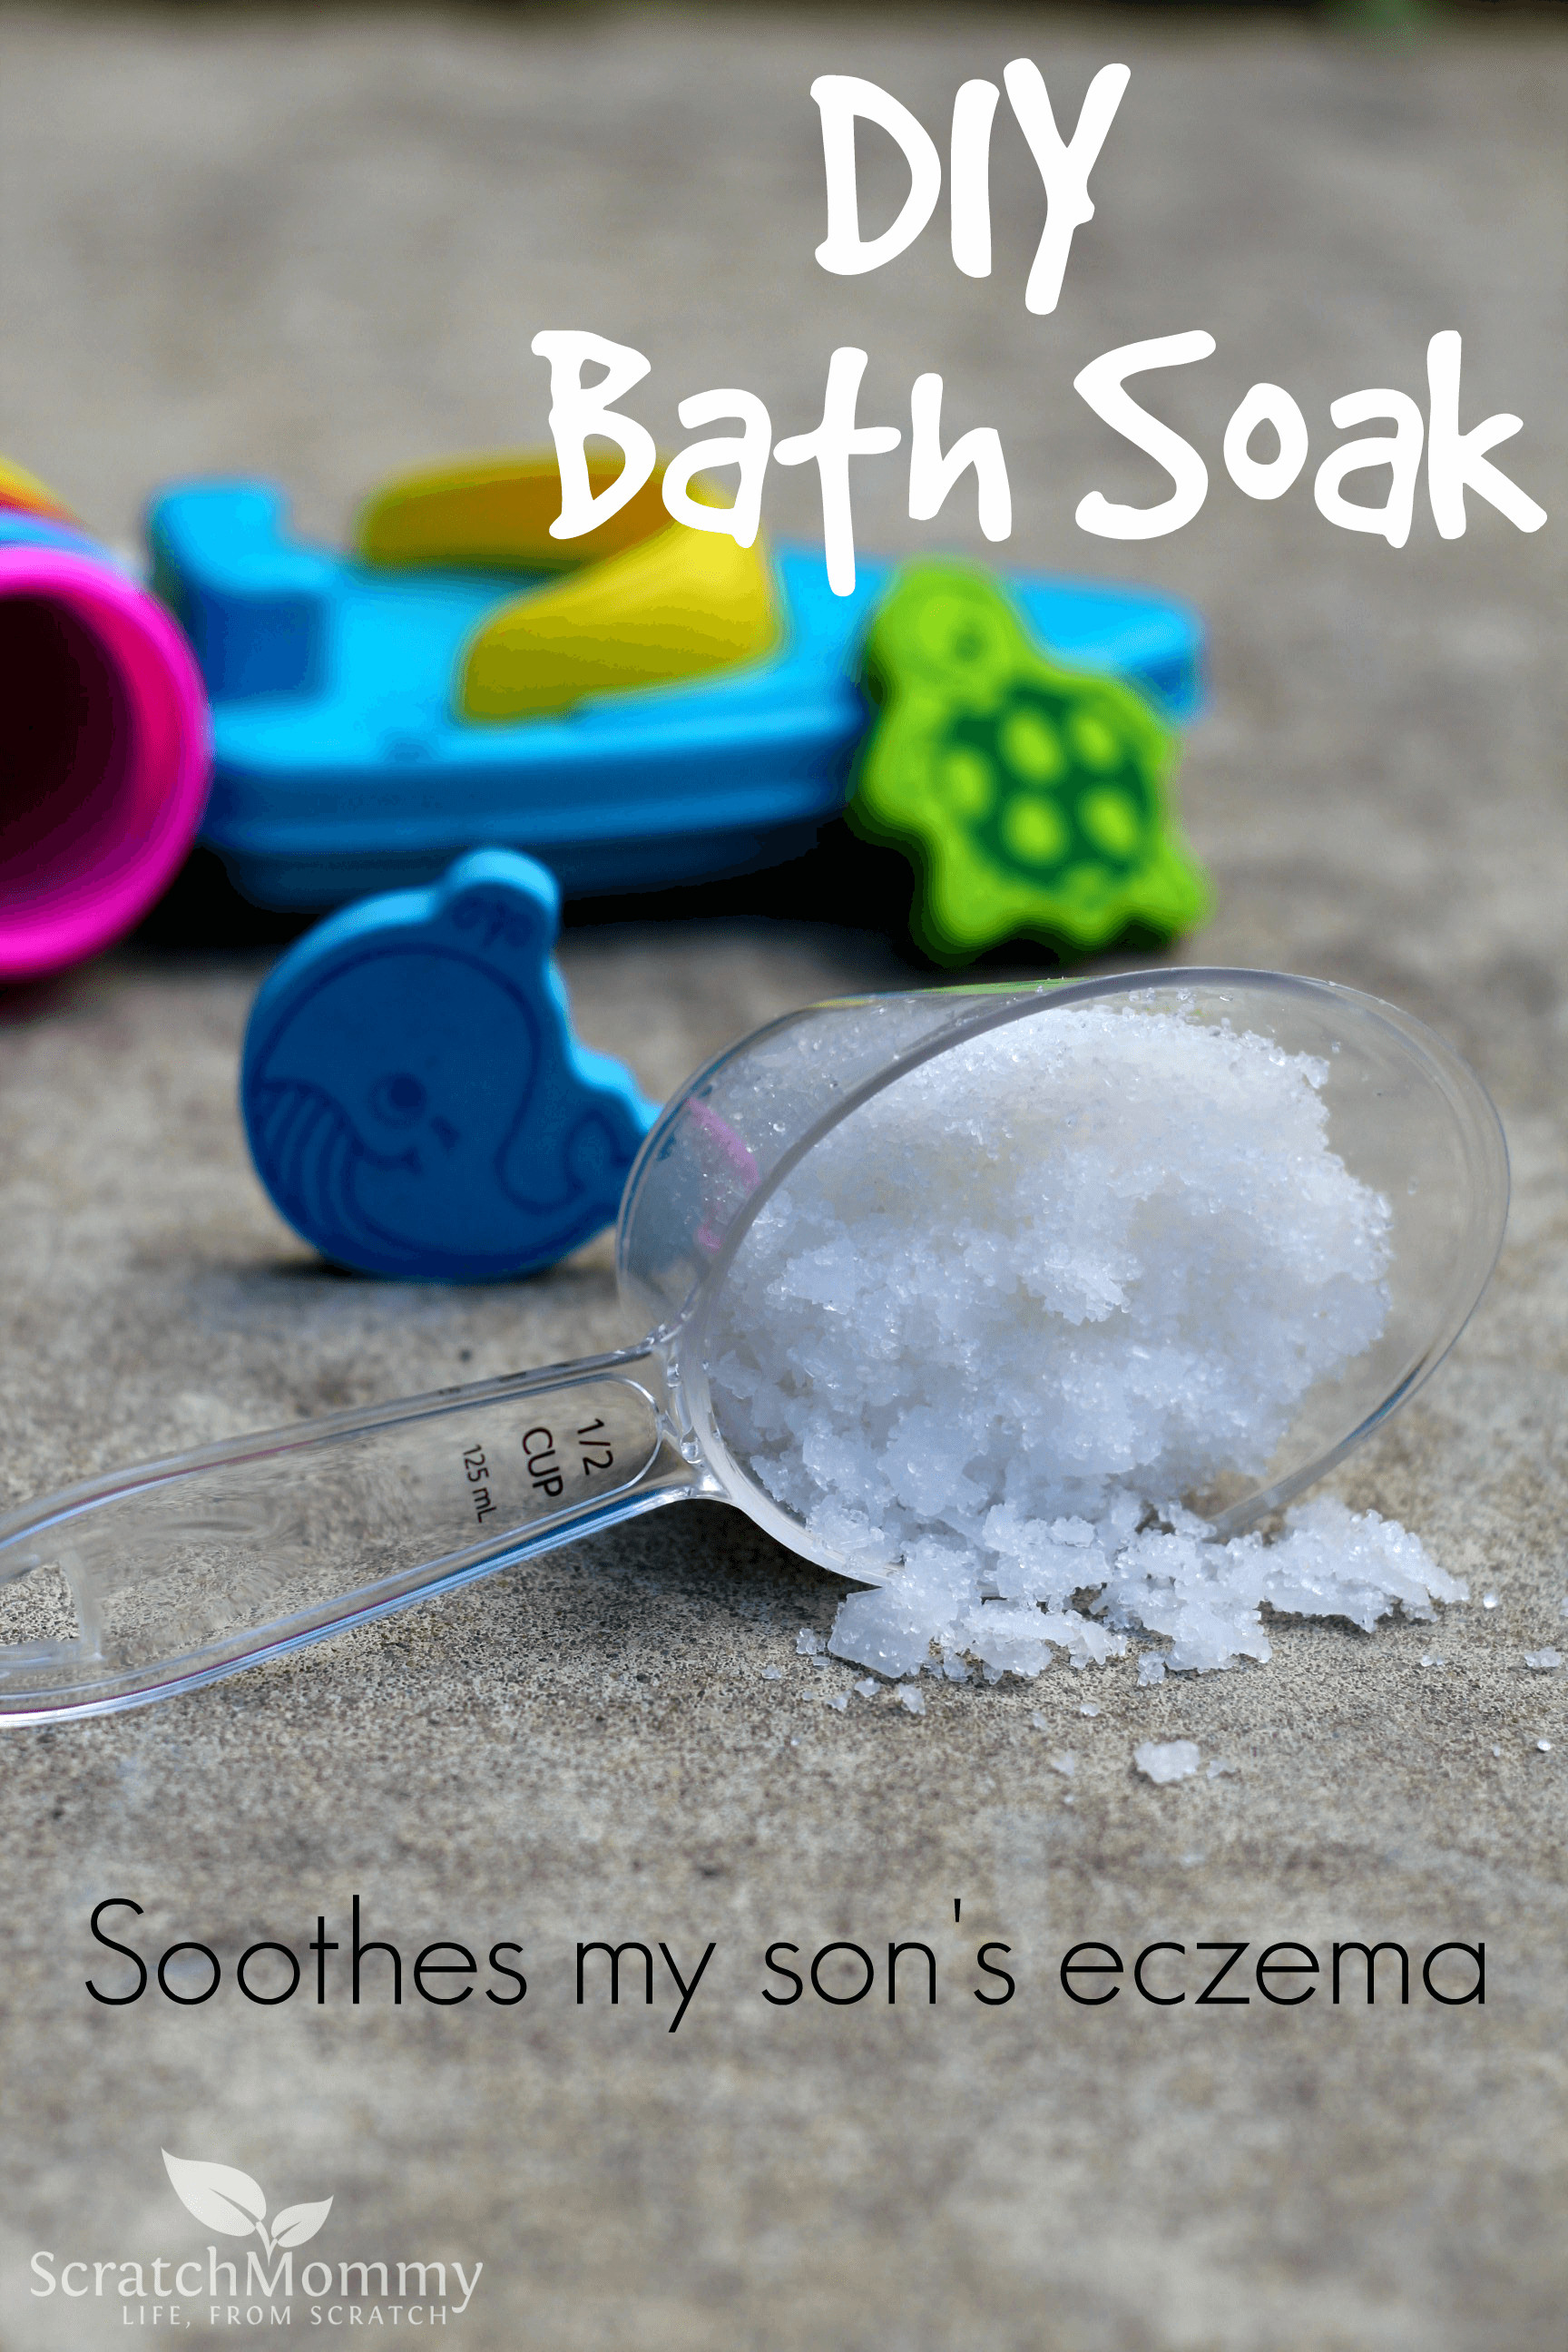 Best ideas about DIY Bath Soaks
. Save or Pin DIY Bath Soak Recipe helps my toddler s eczema Now.